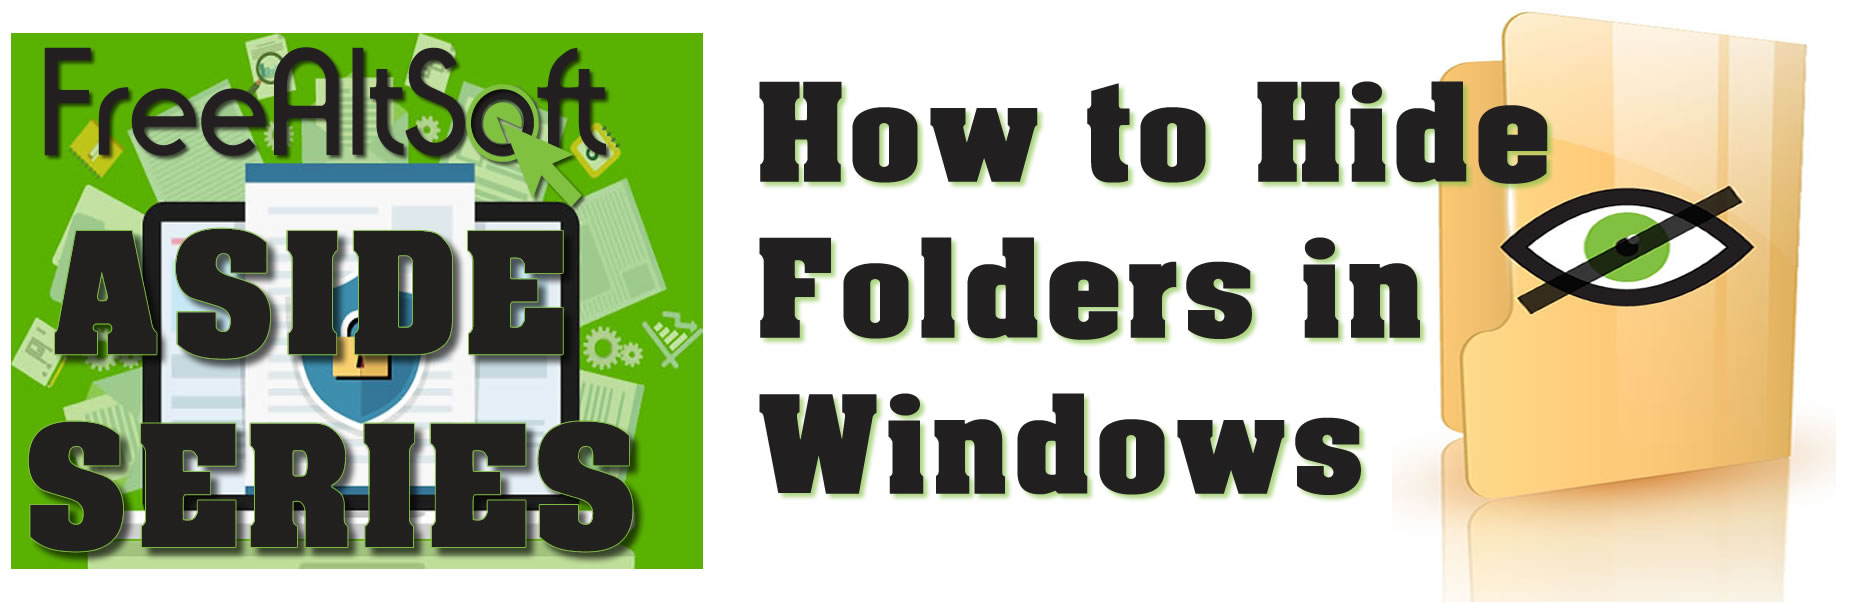 How To Hide A Folder In Windows